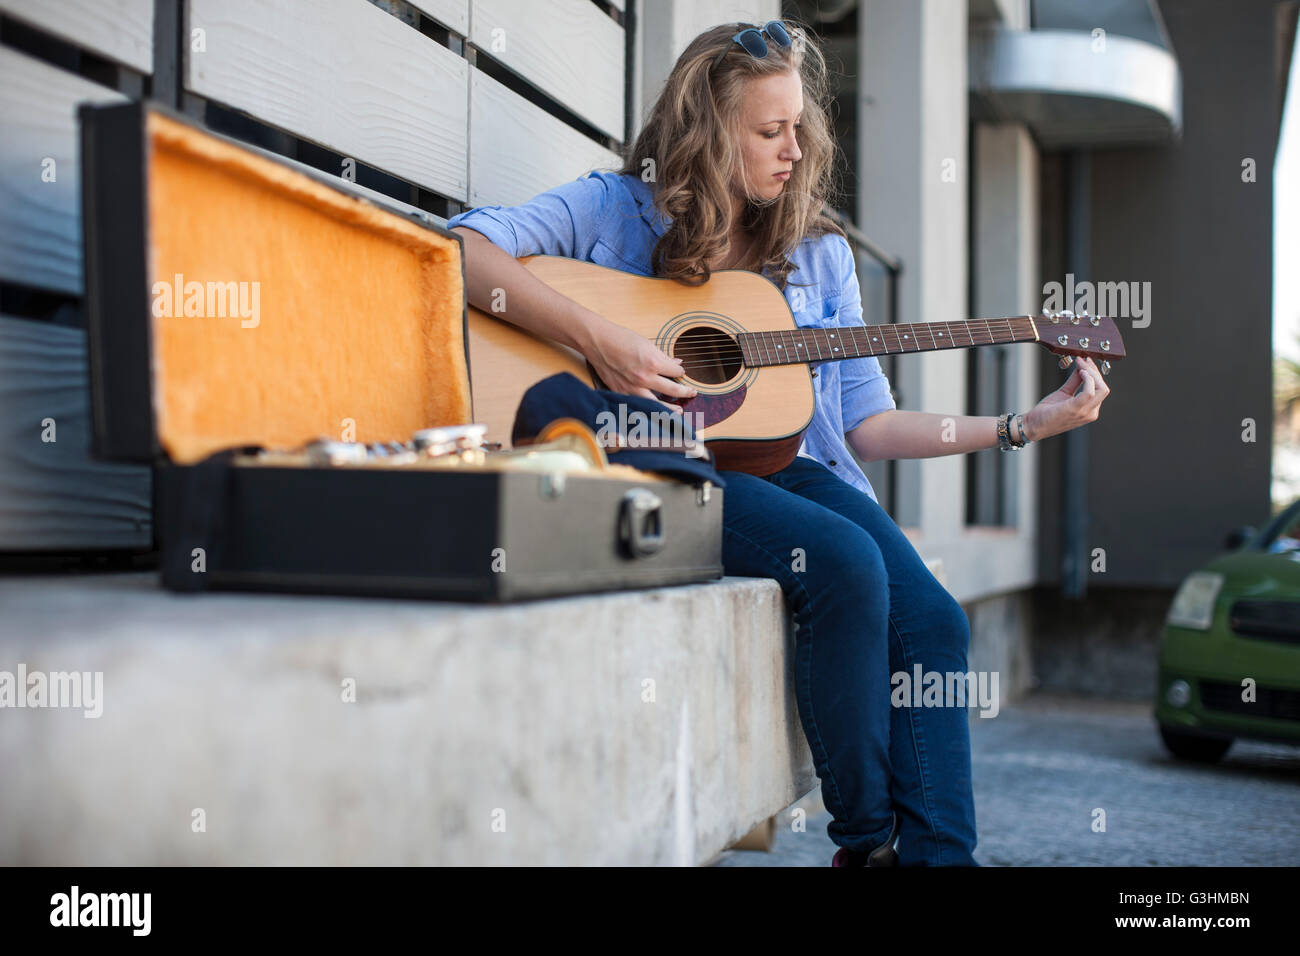 Female street musician sitting on ledge, tuning guitar Stock Photo